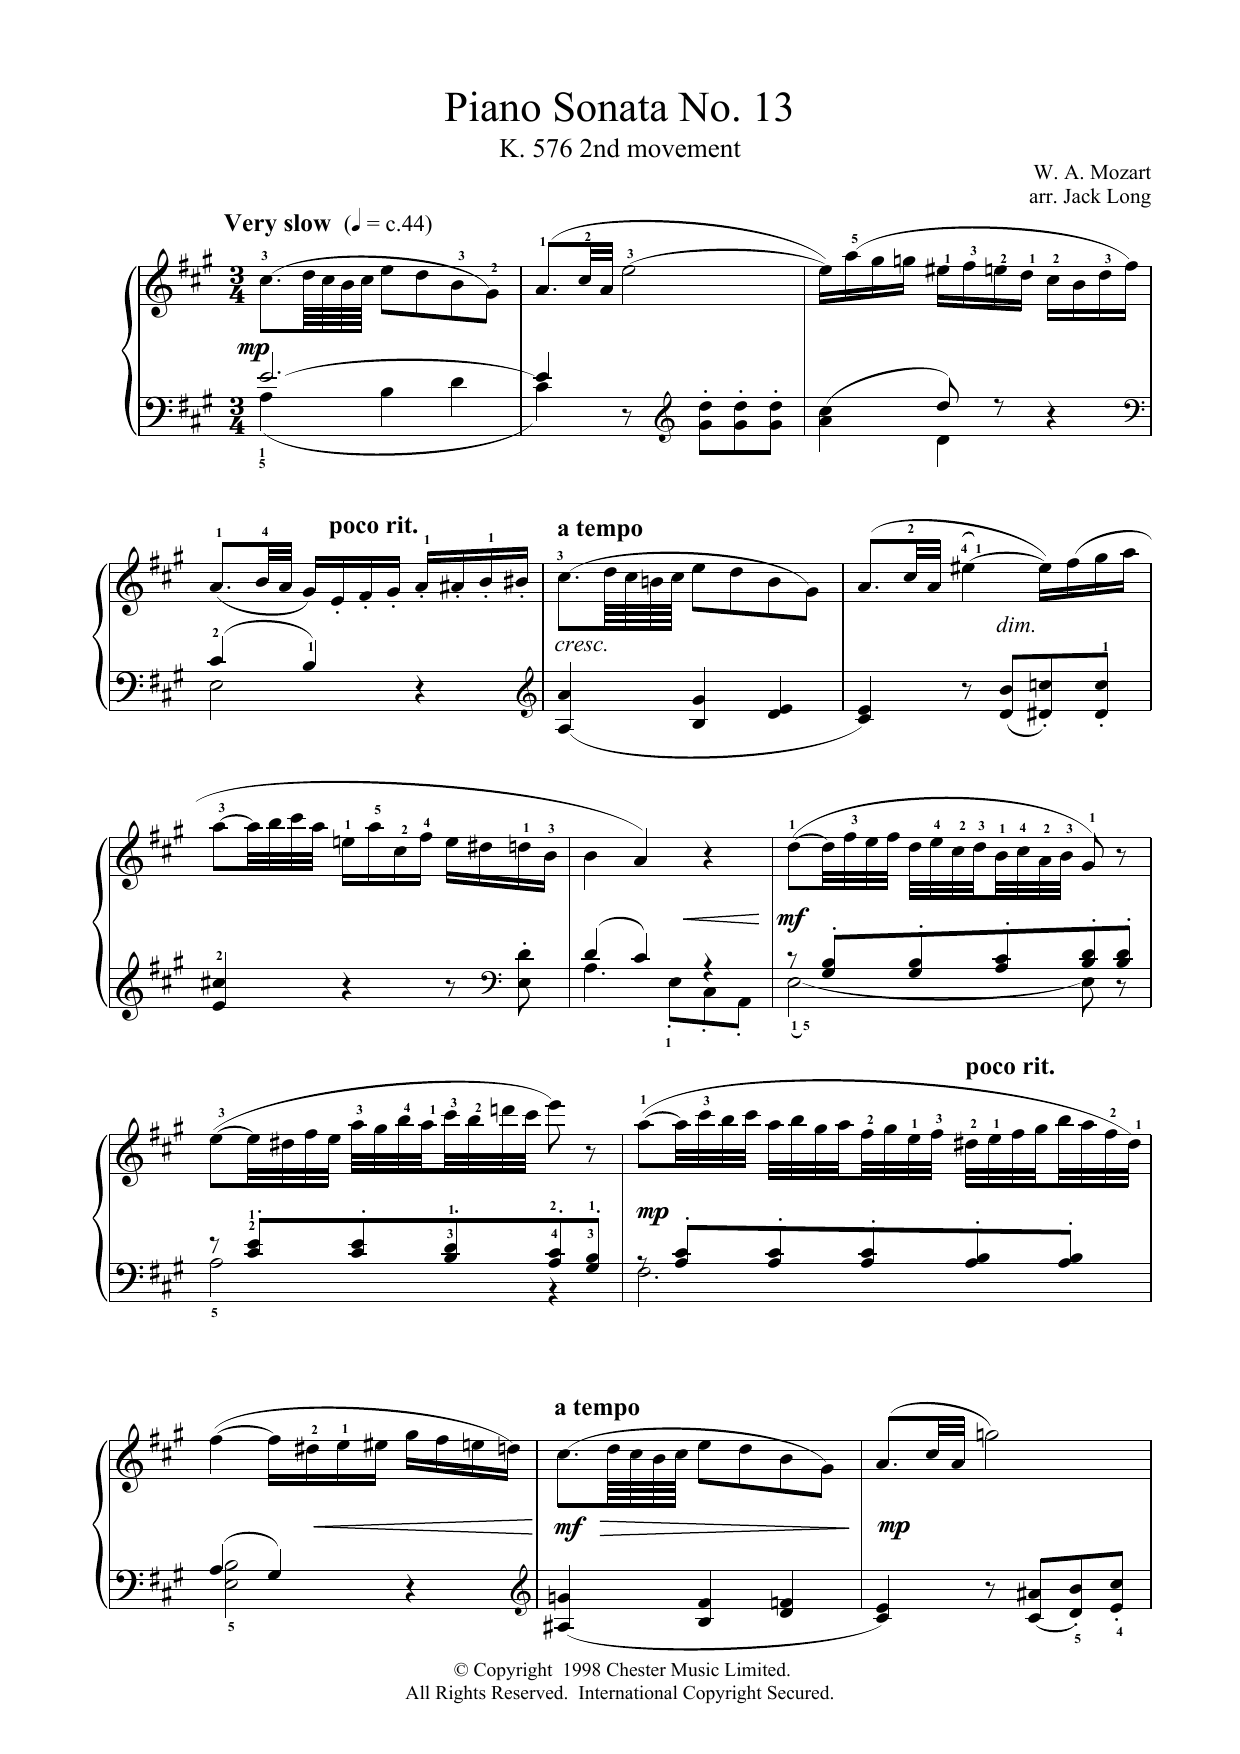 Wolfgang Amadeus Mozart Piano Sonata No.13 sheet music notes and chords arranged for Piano Solo